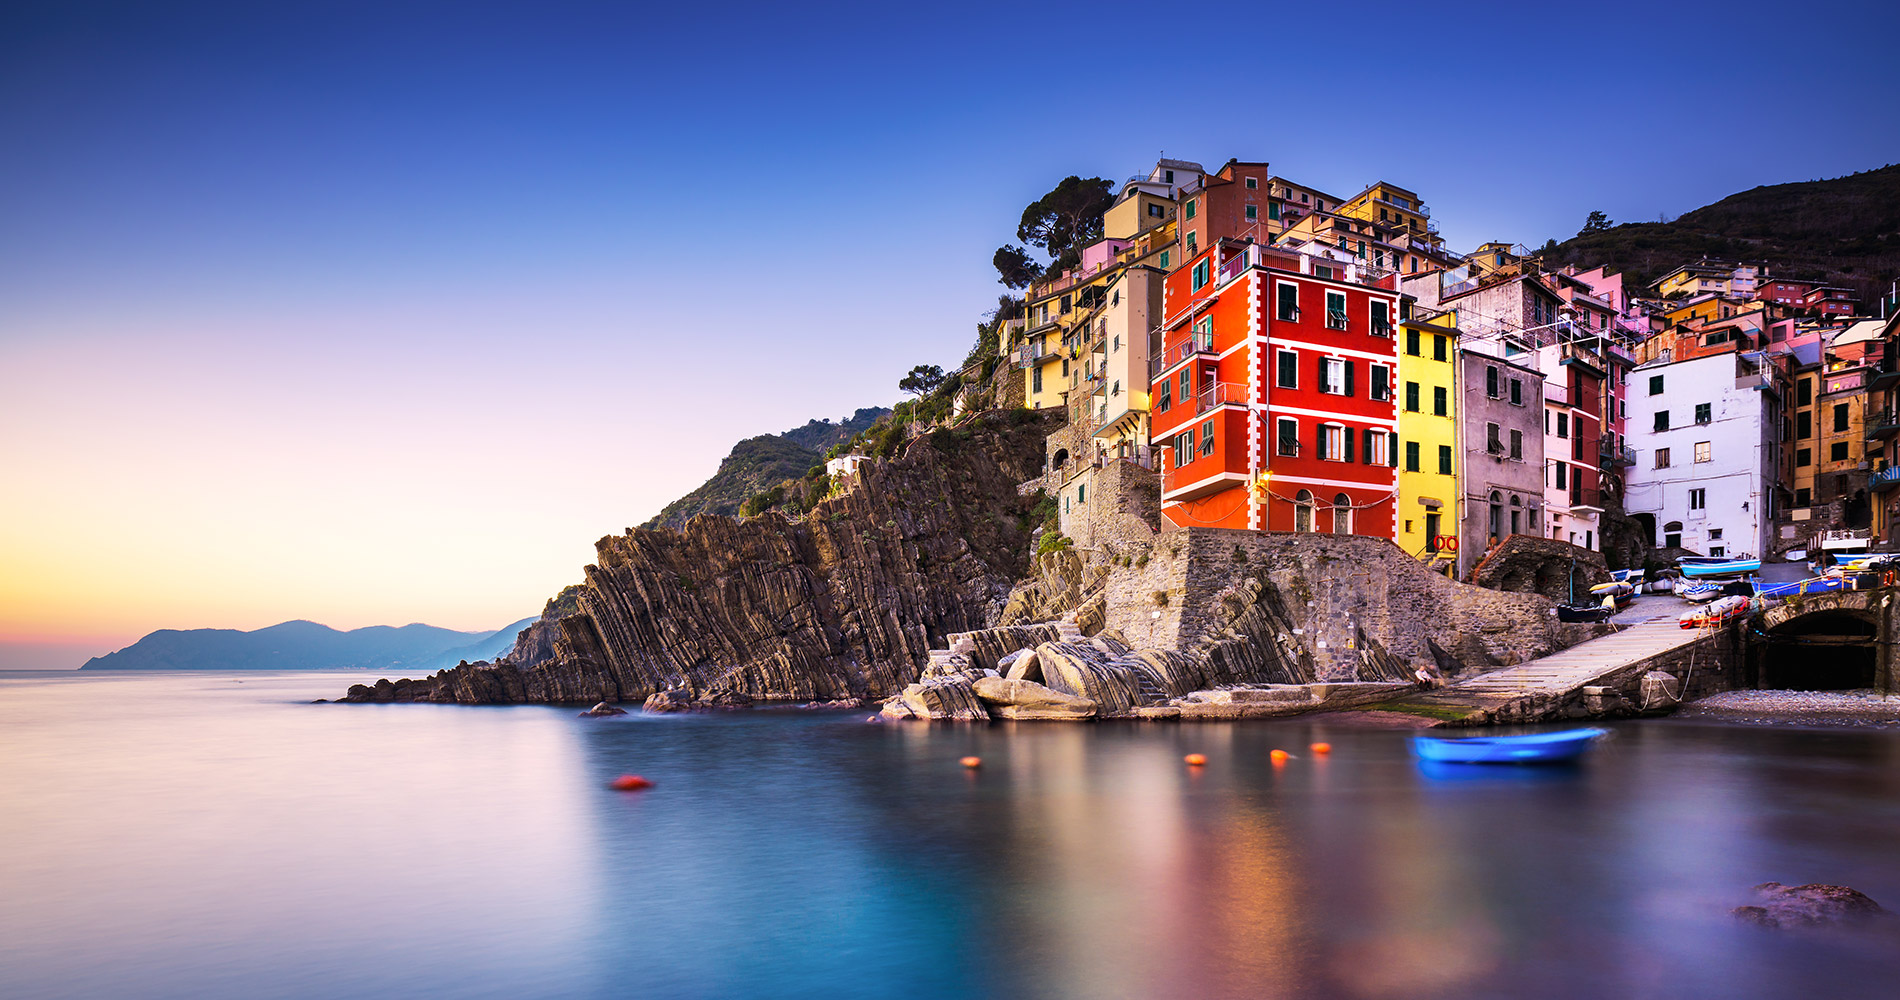 Photo of the enchanting harbor of Riomaggiore in the Cinque Terre